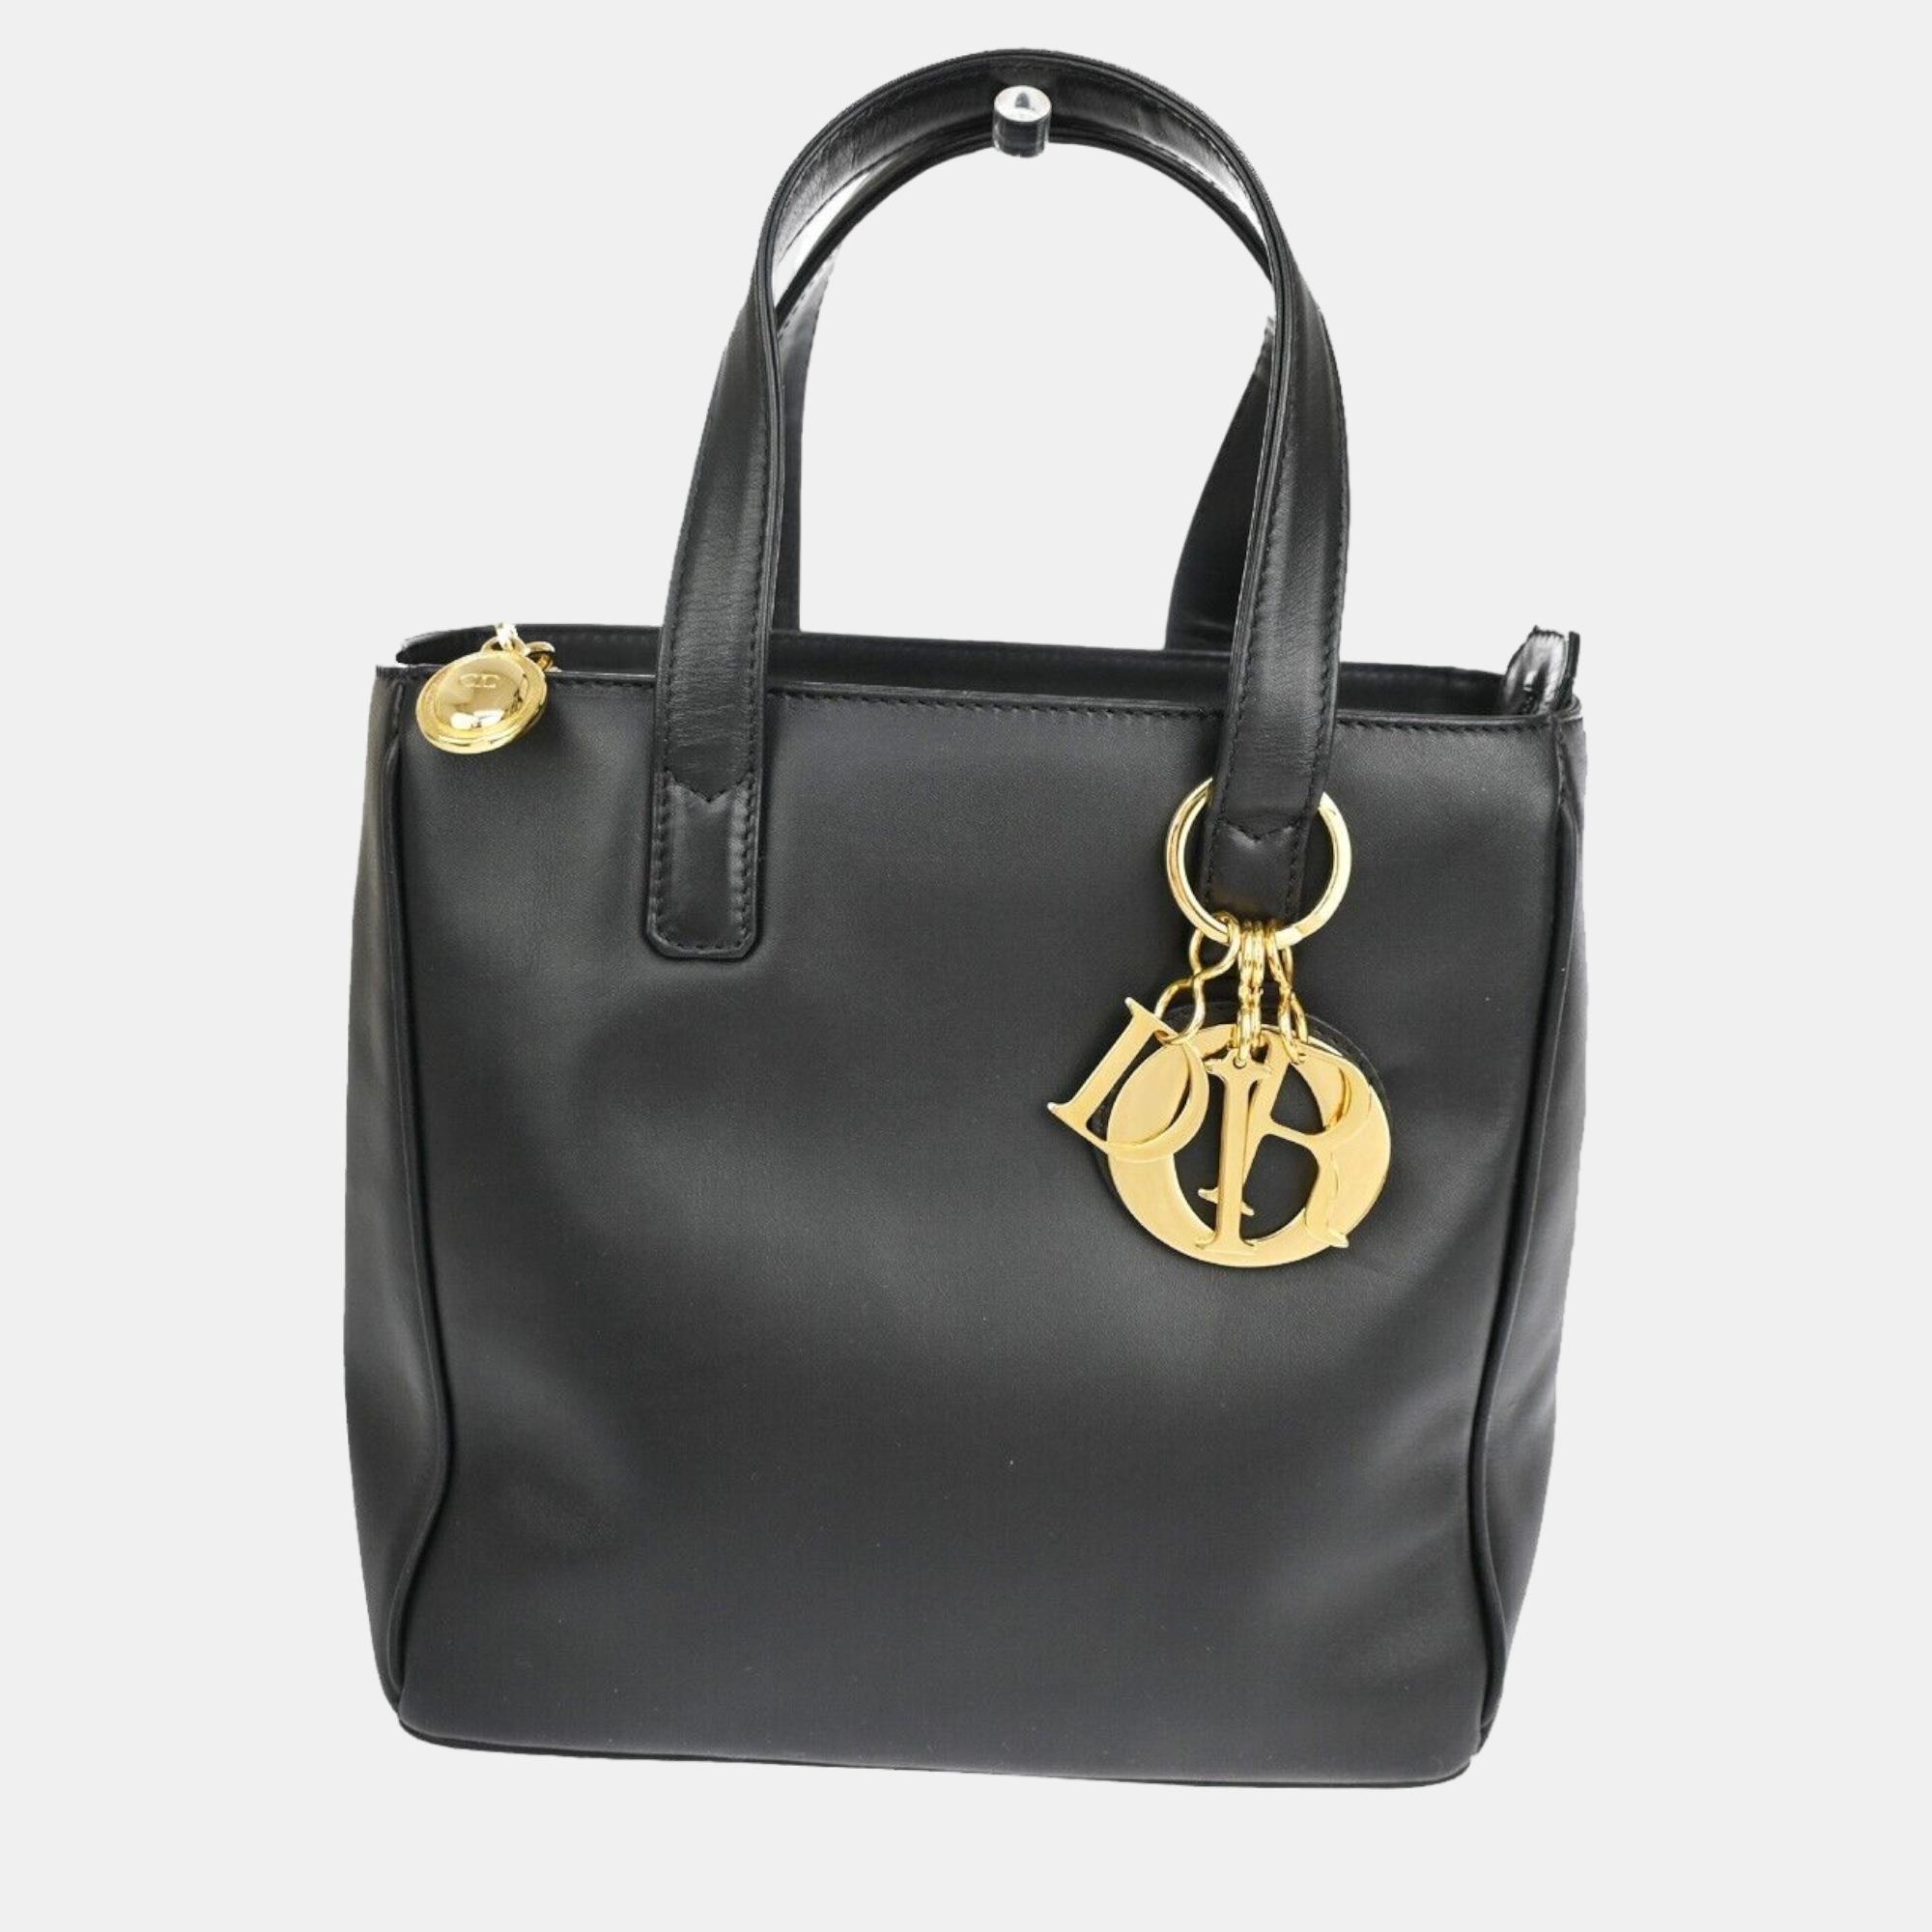 Dior black leather lady dior handbag